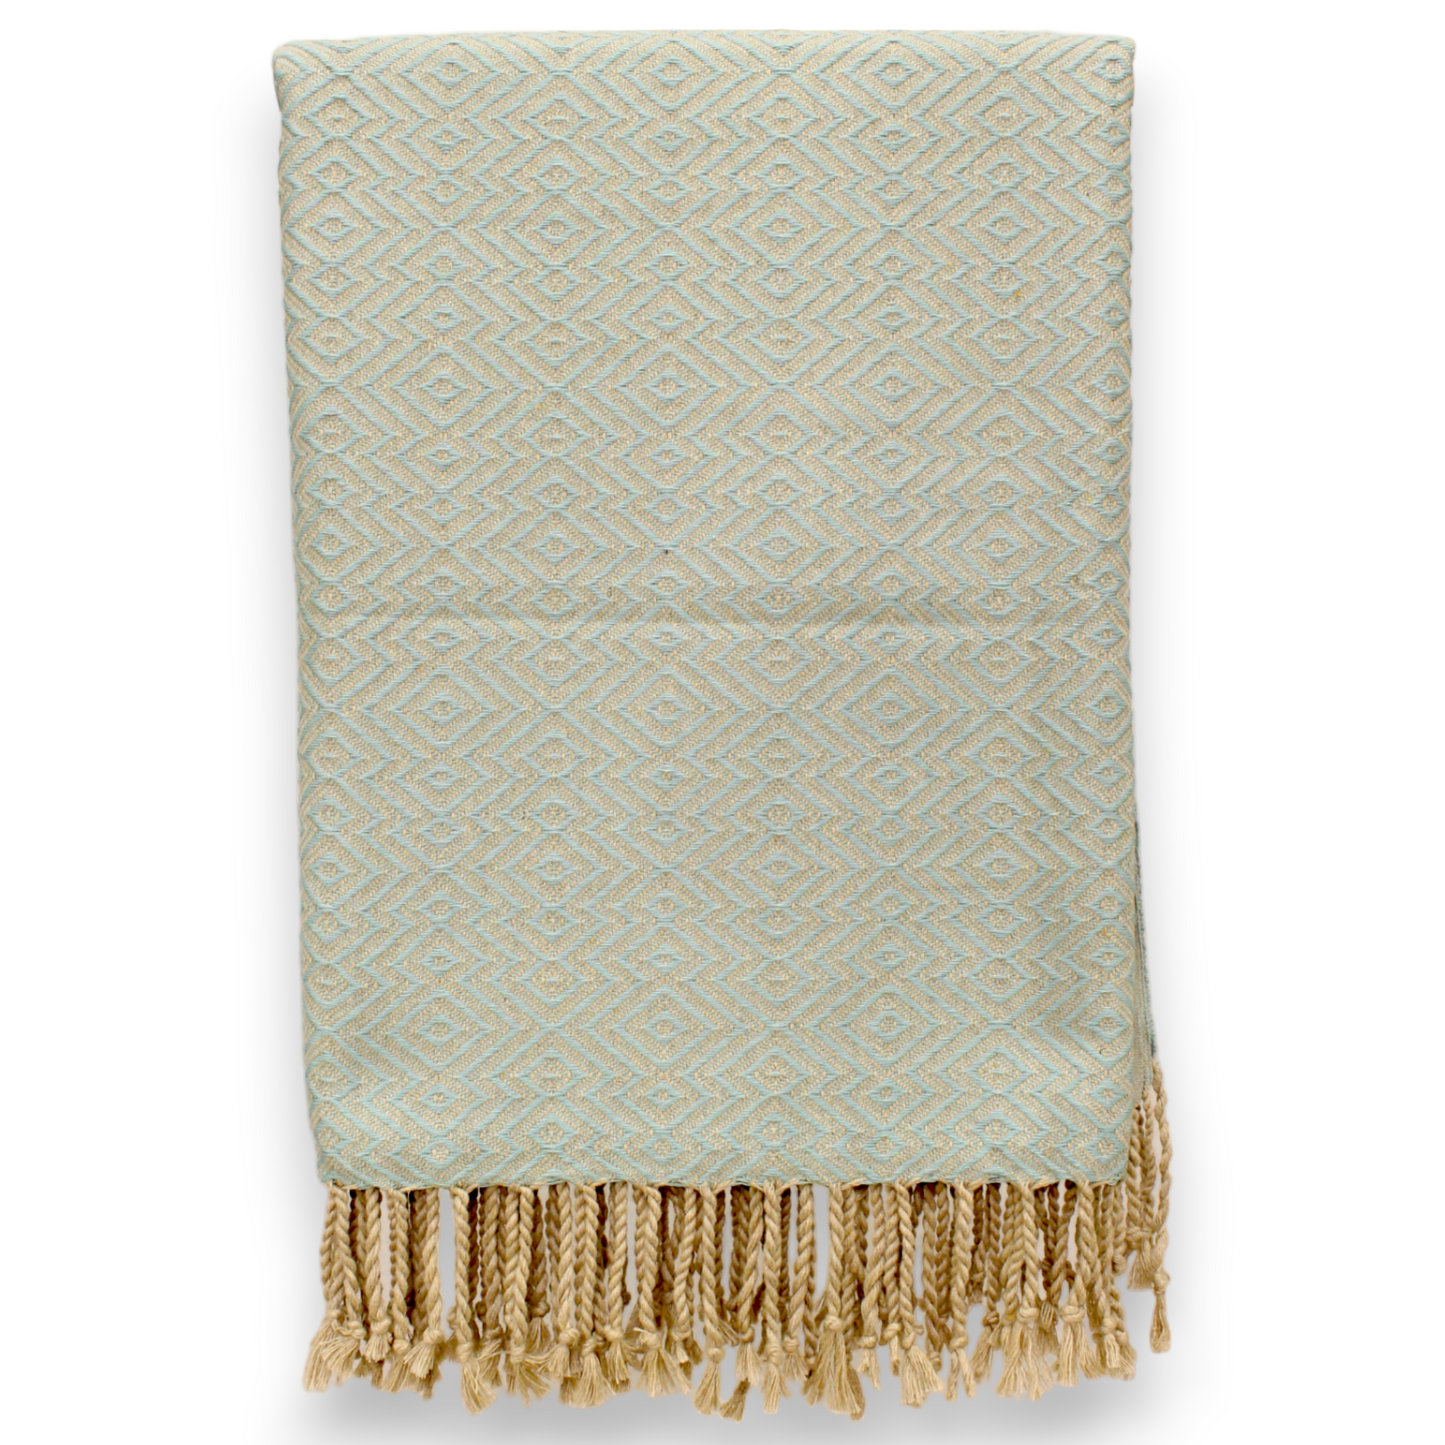 Turkish Towel Pestemal - Beach Blanket